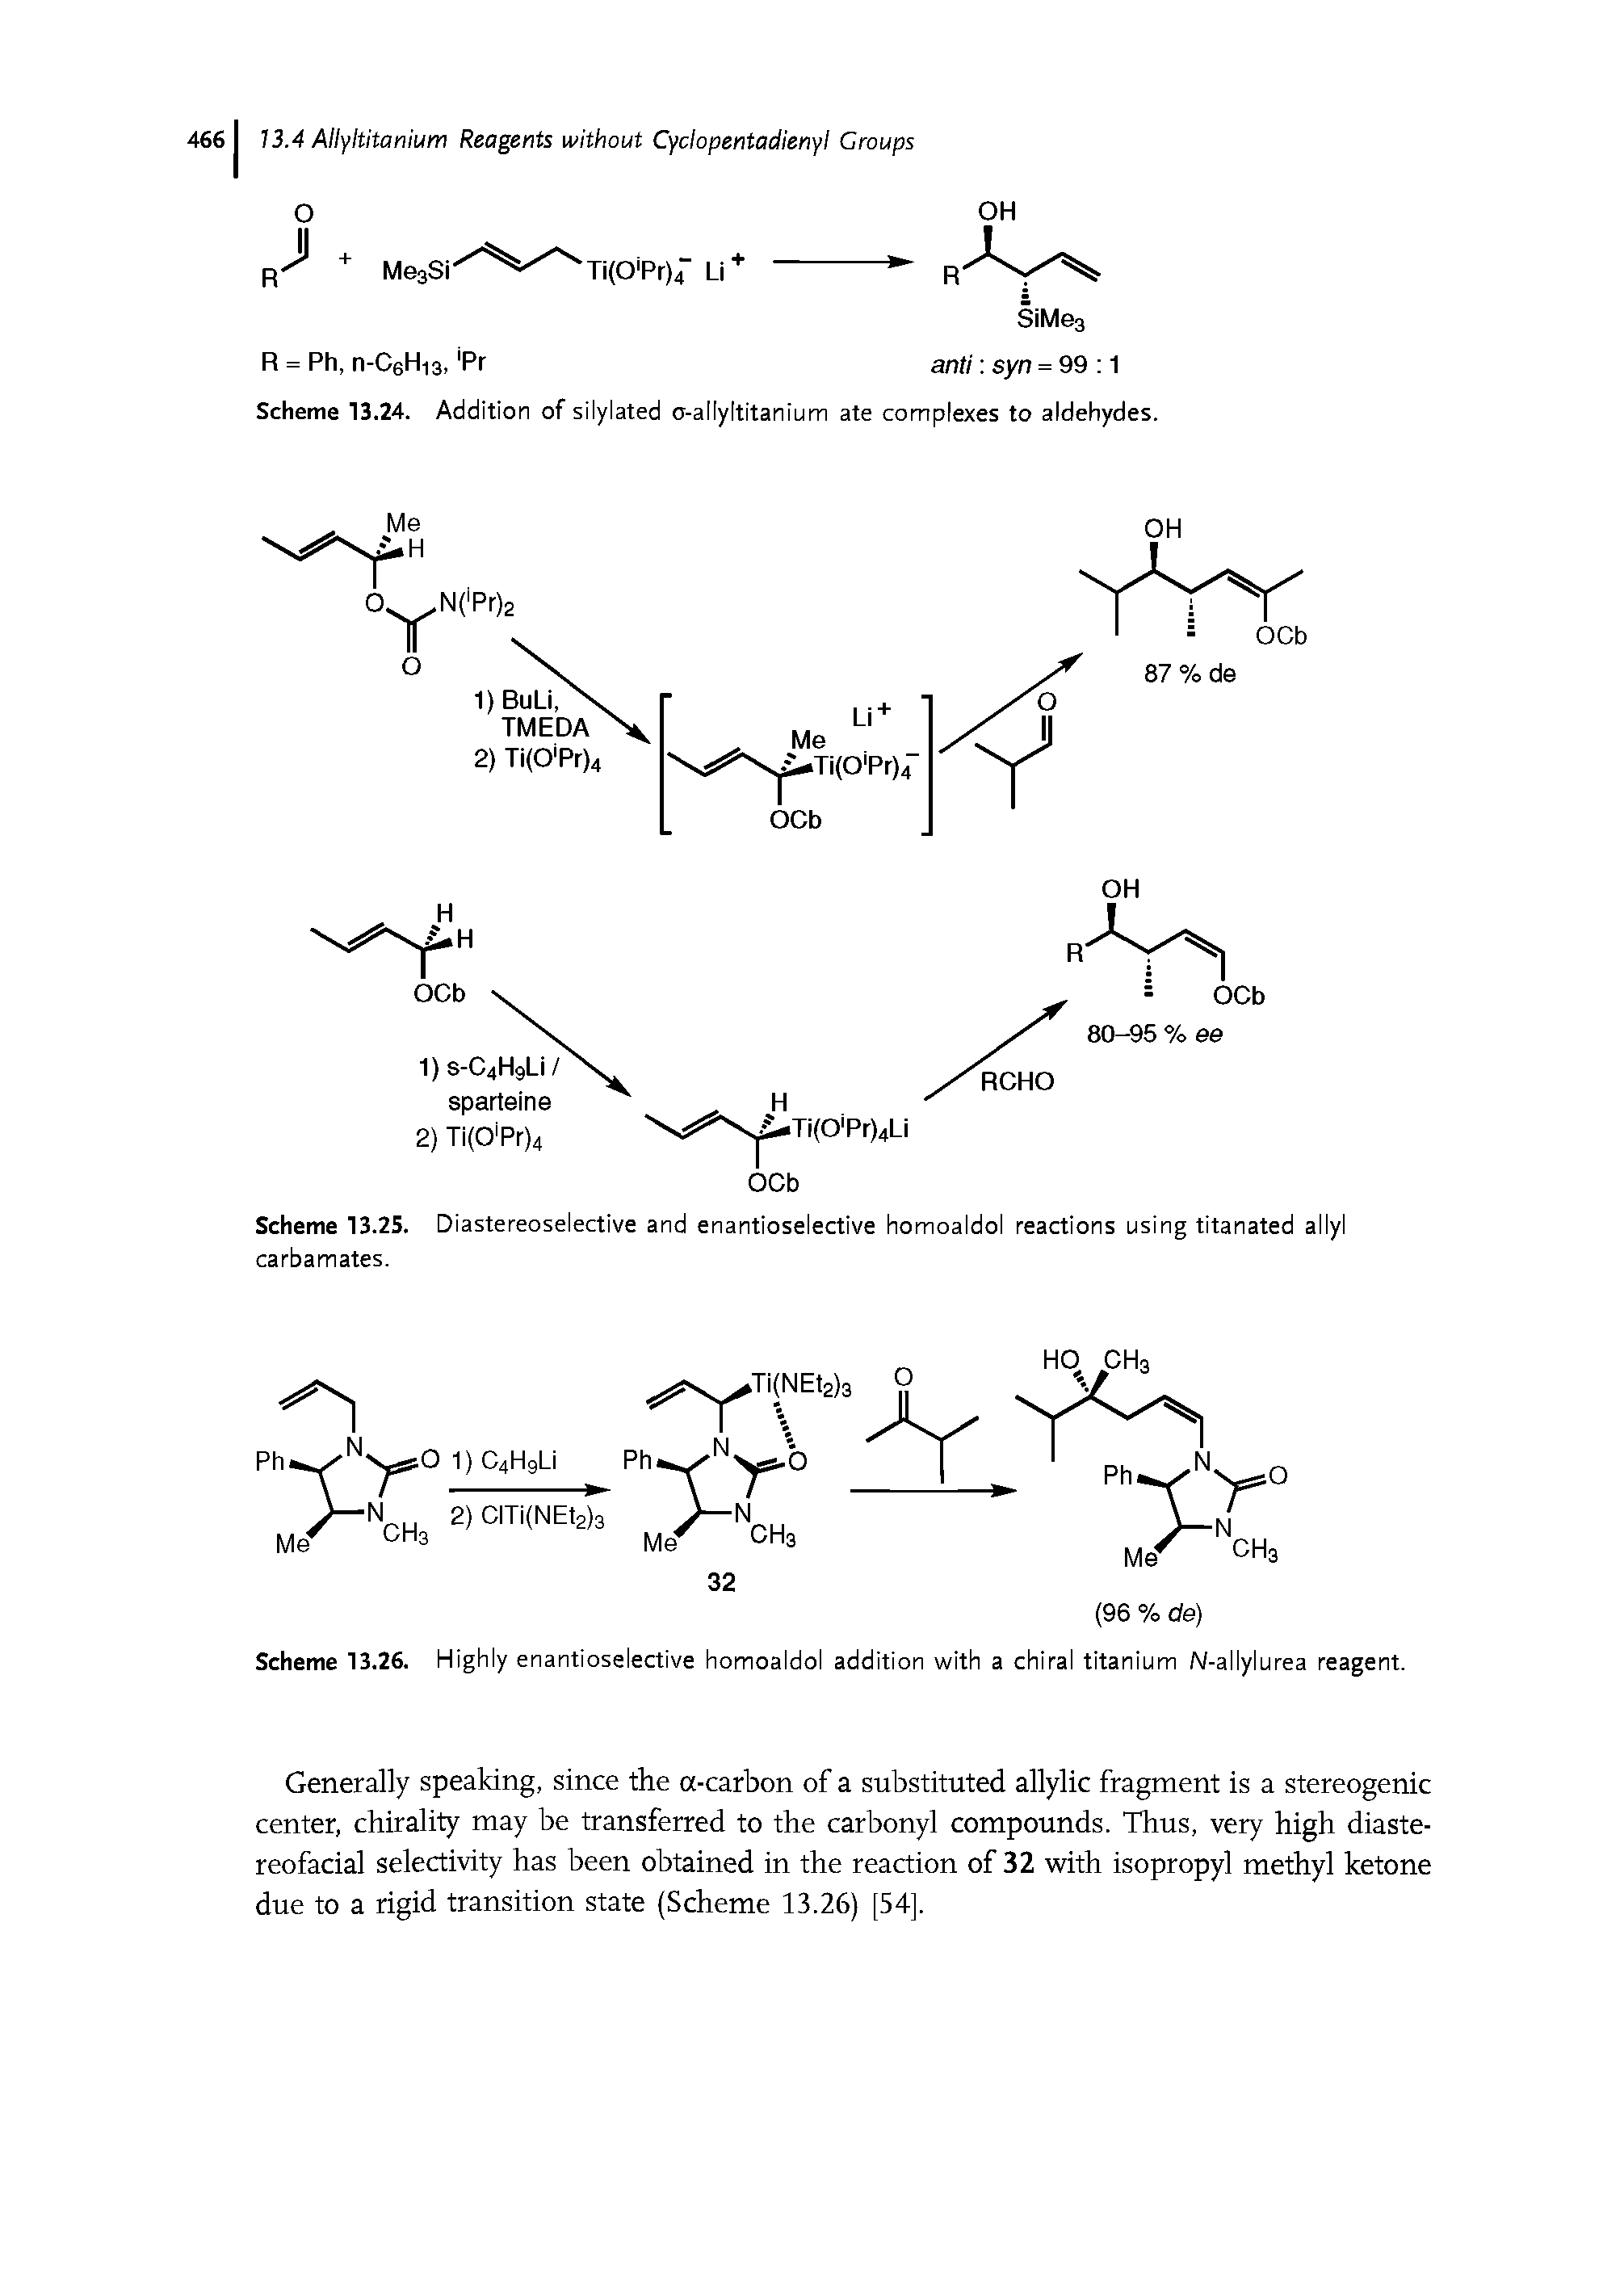 Scheme 13.25. Diastereoselective and enantioselective homoaldol reactions using titanated allyl carbamates.